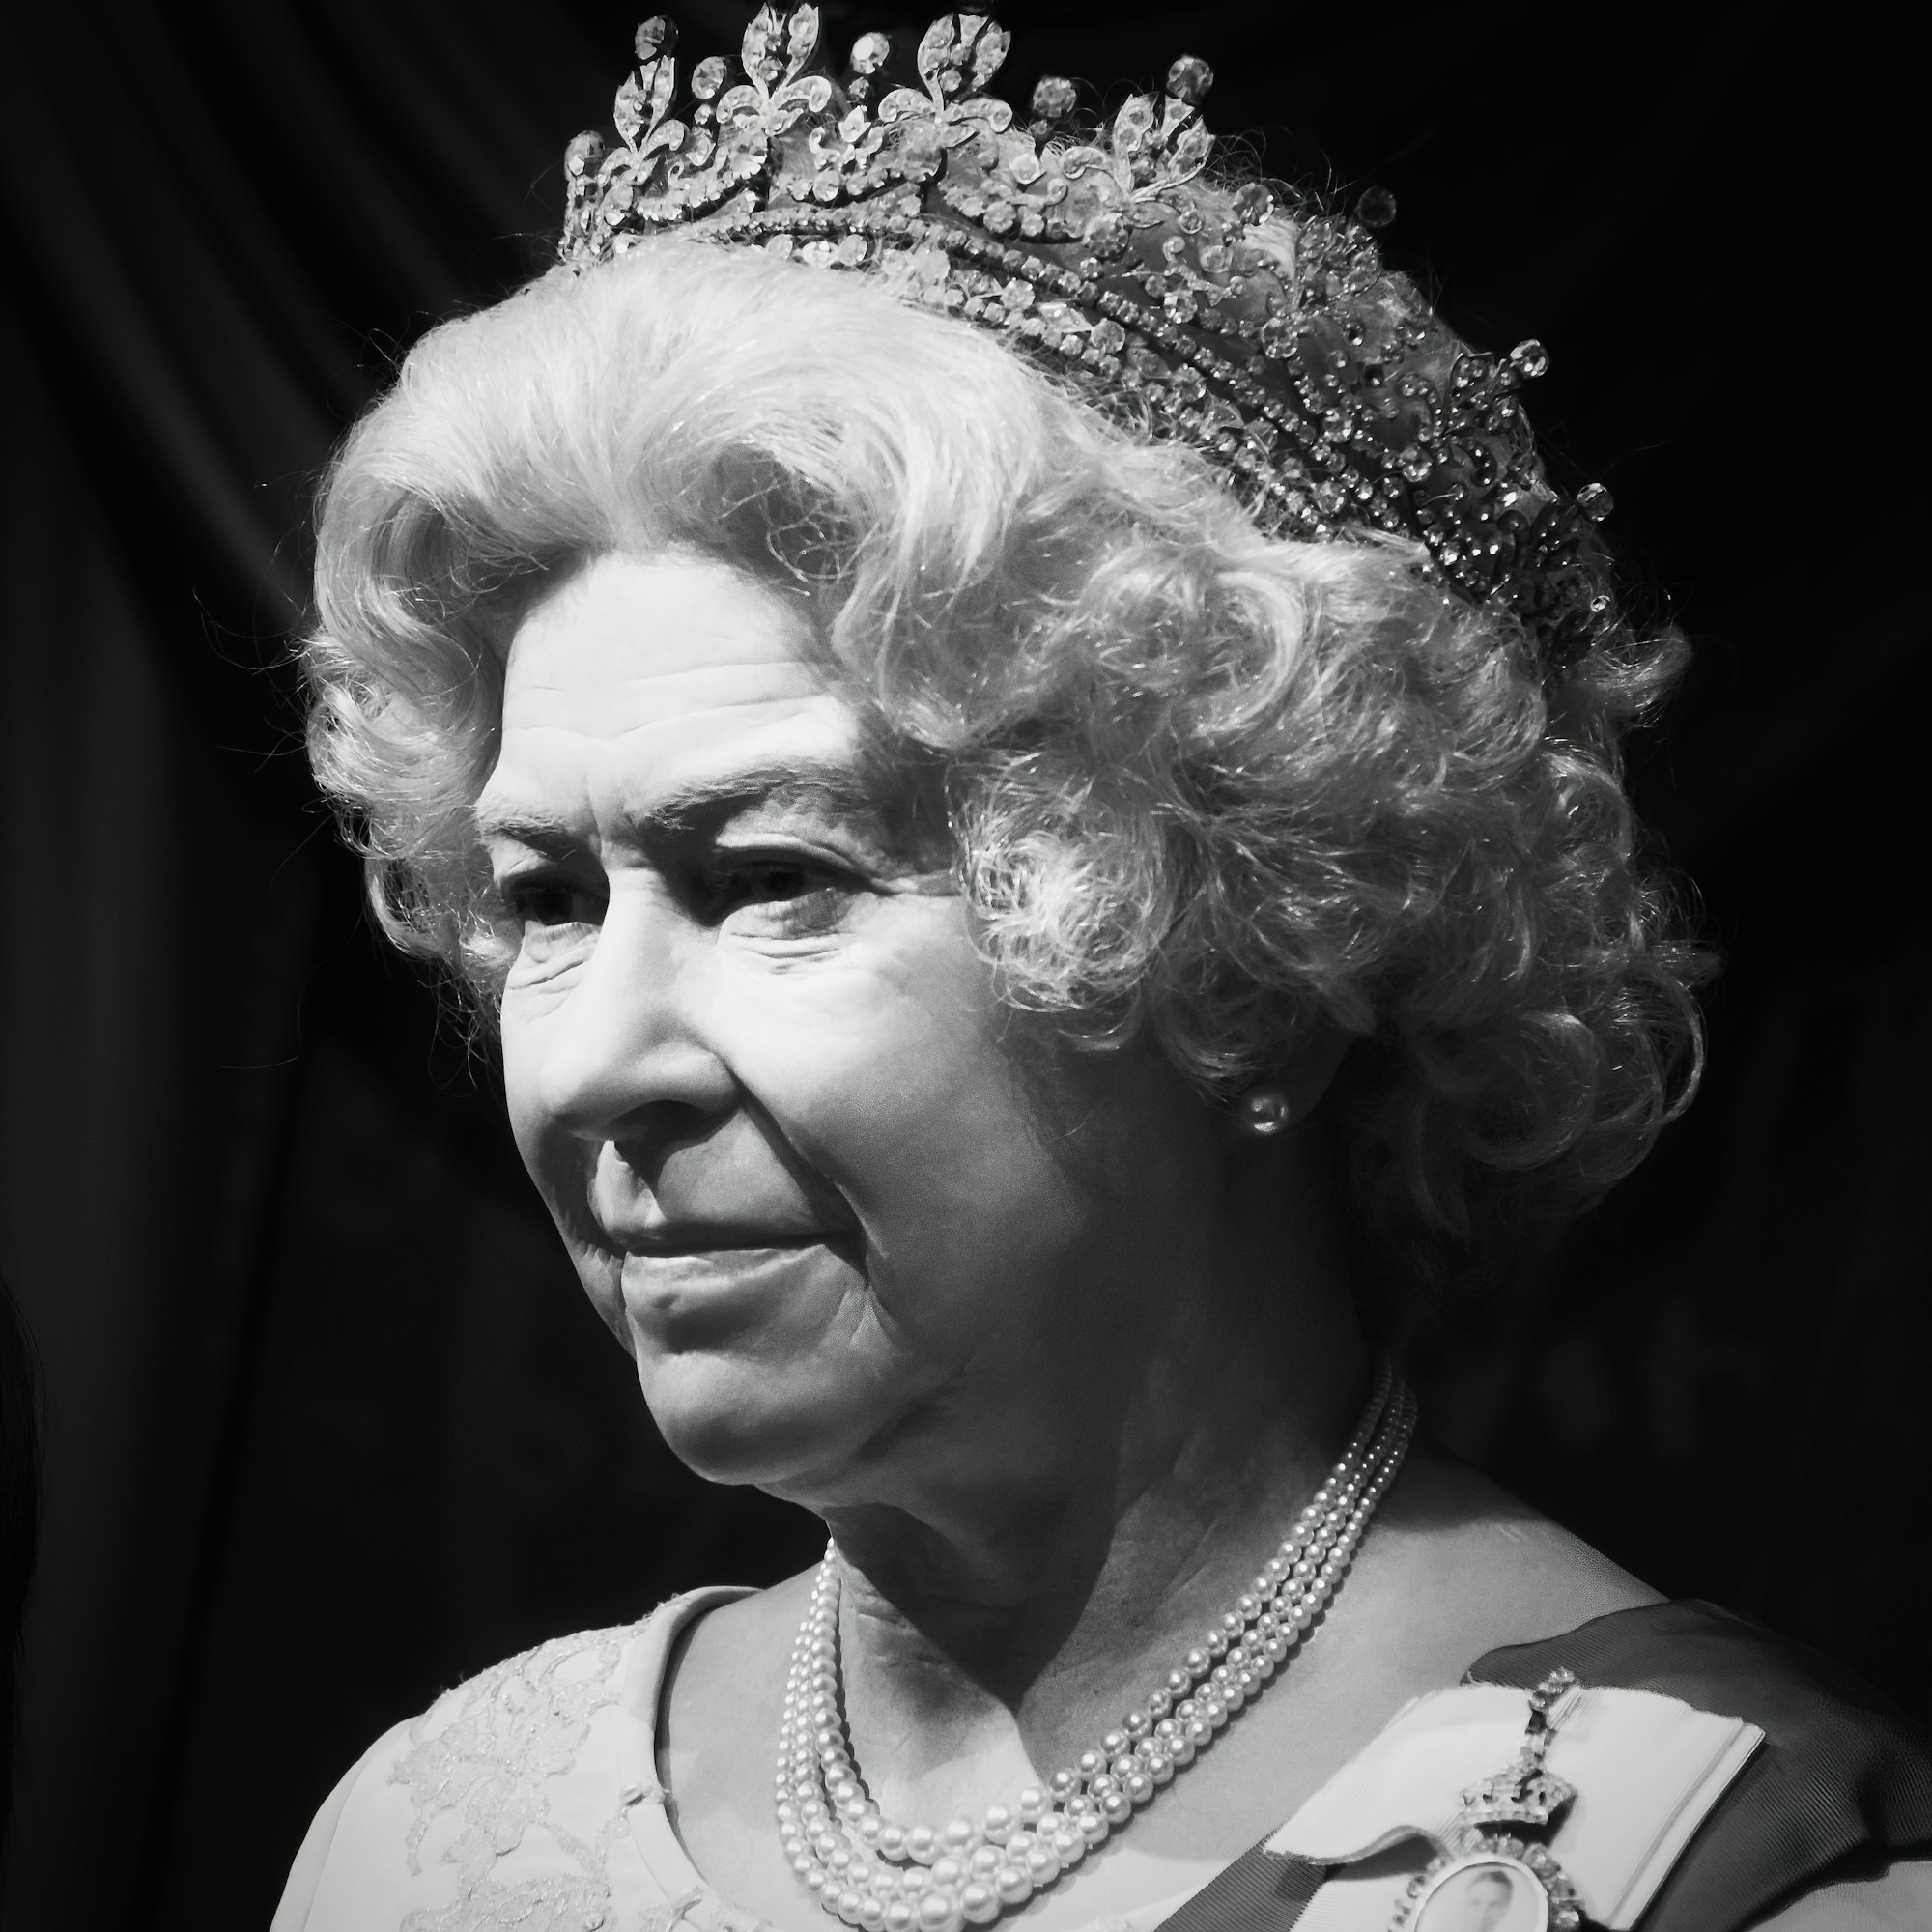 Waxwork of Queen Elizabeth II on display at Madame Tussauds, Marylebone, London, England.